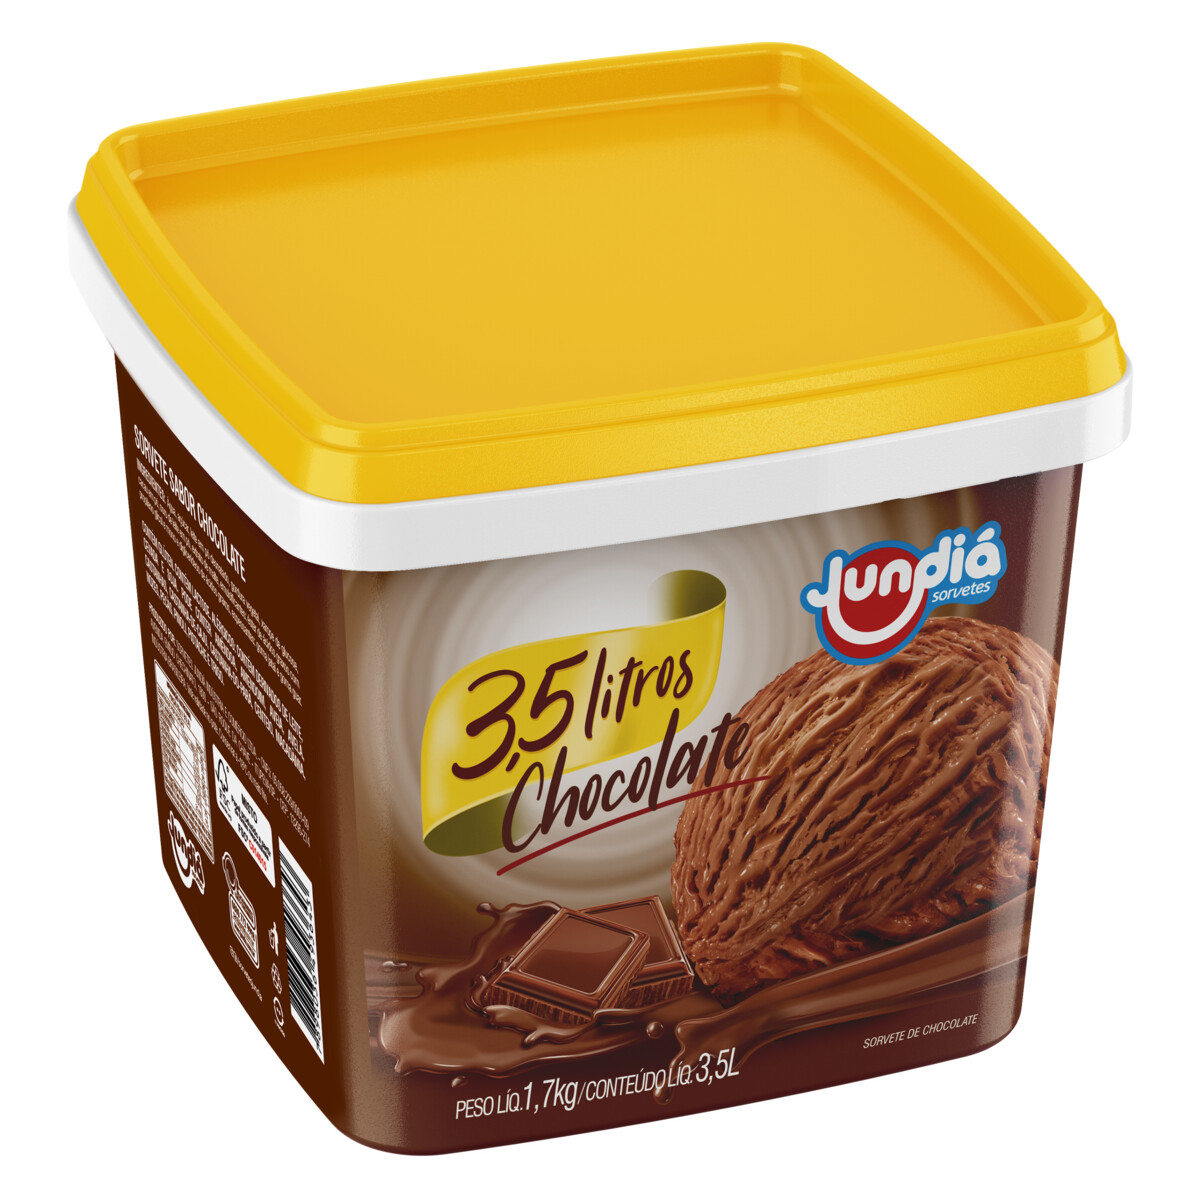 Sorvete Jundiá Chocolate - 3,5 Litro